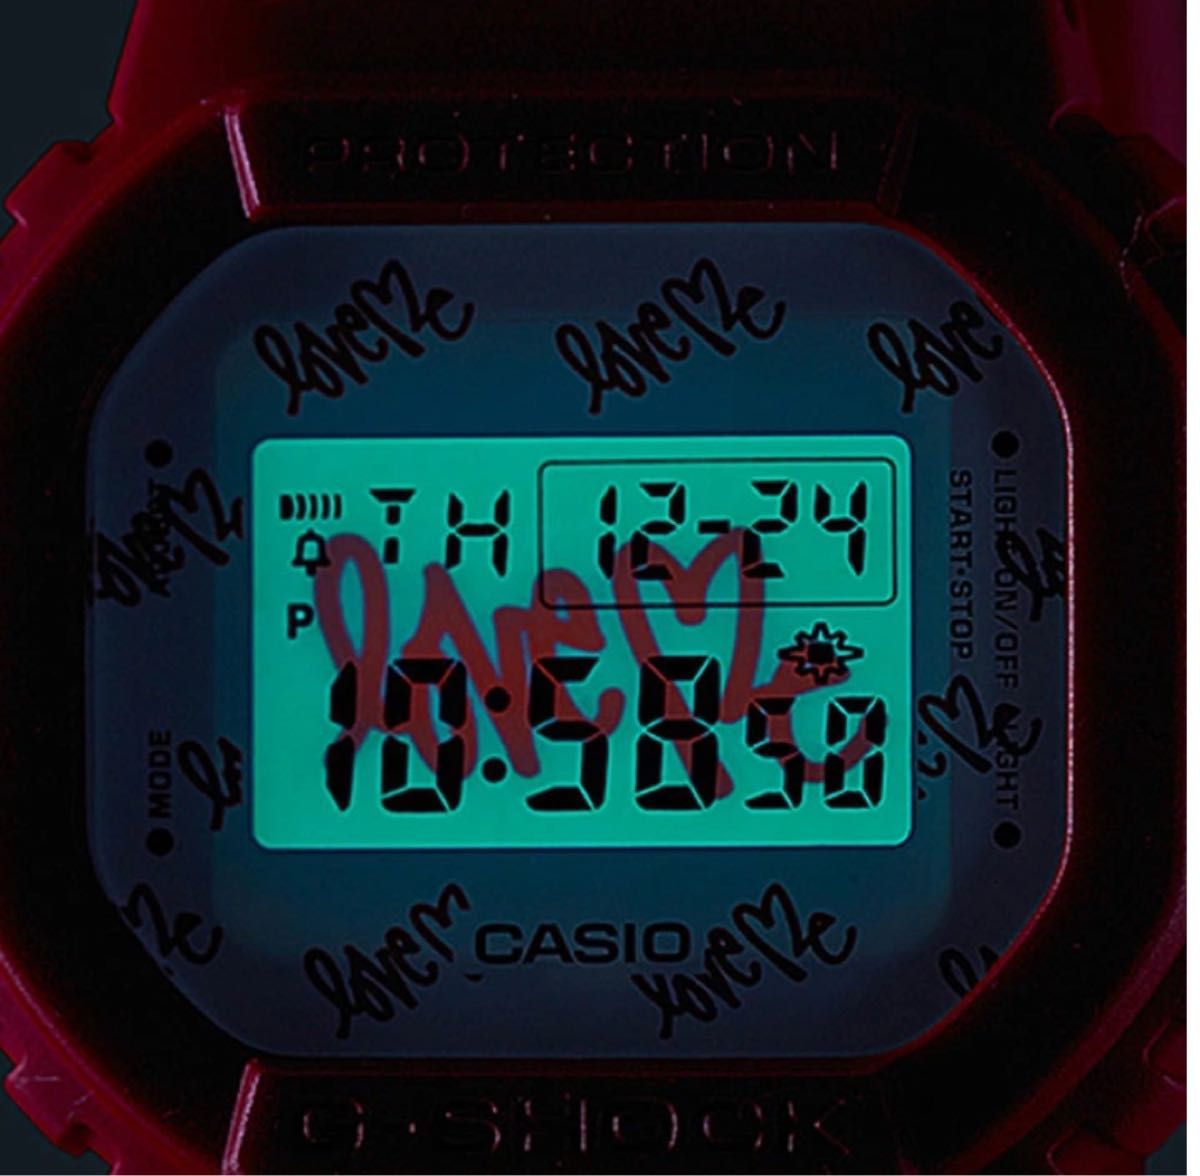 CASIO G-SHOCK 腕時計 ラバーズコレクション 2020(baby-gのみ)